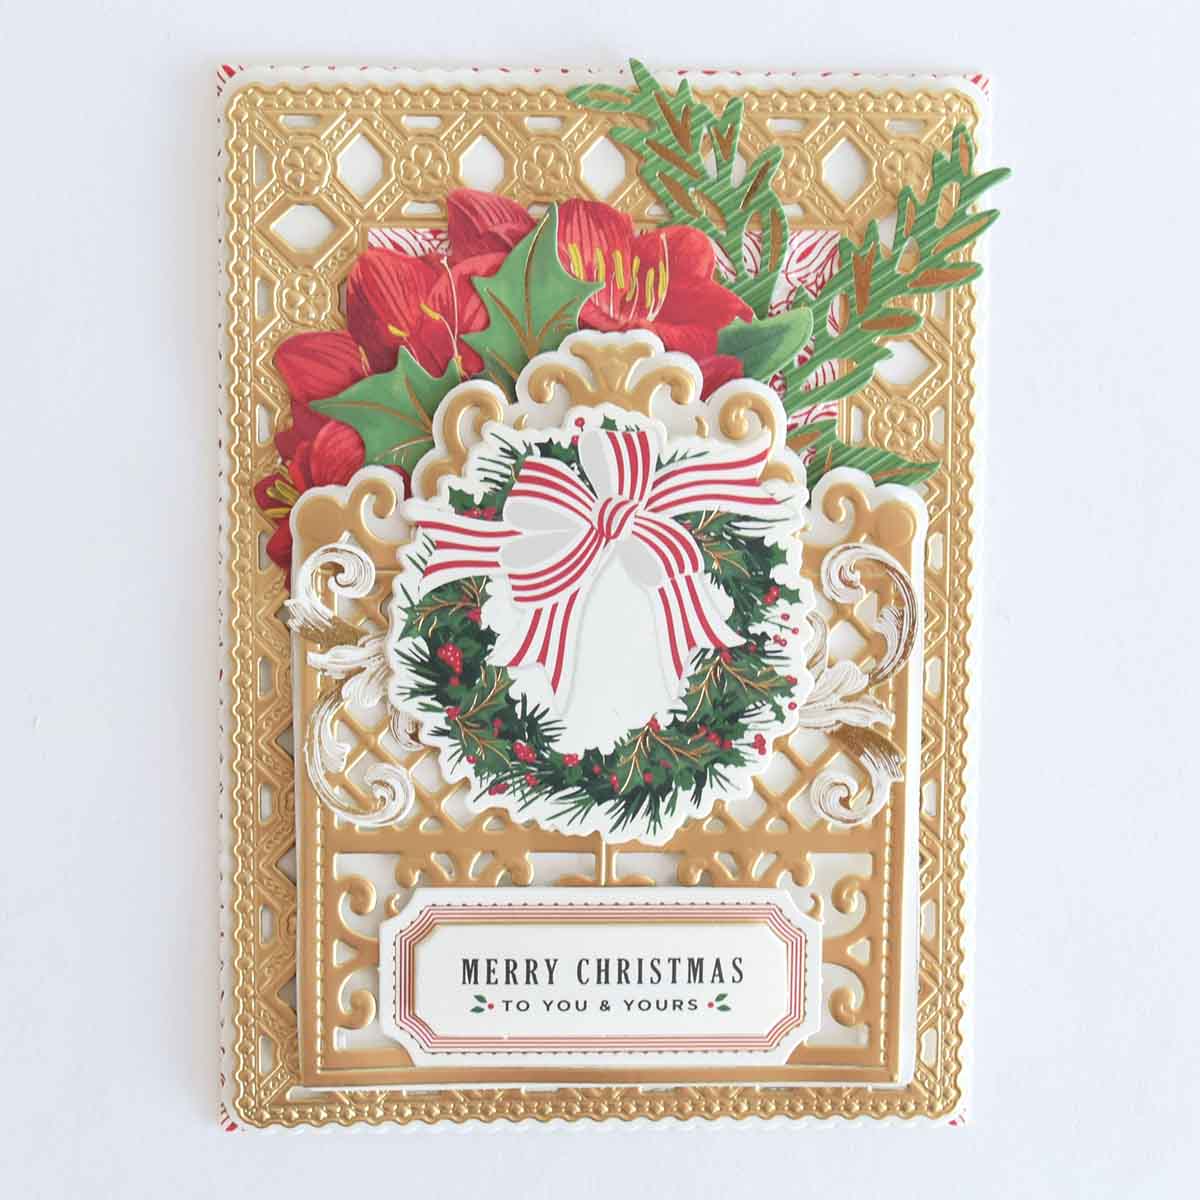 a christmas card with a wreath and a bow.